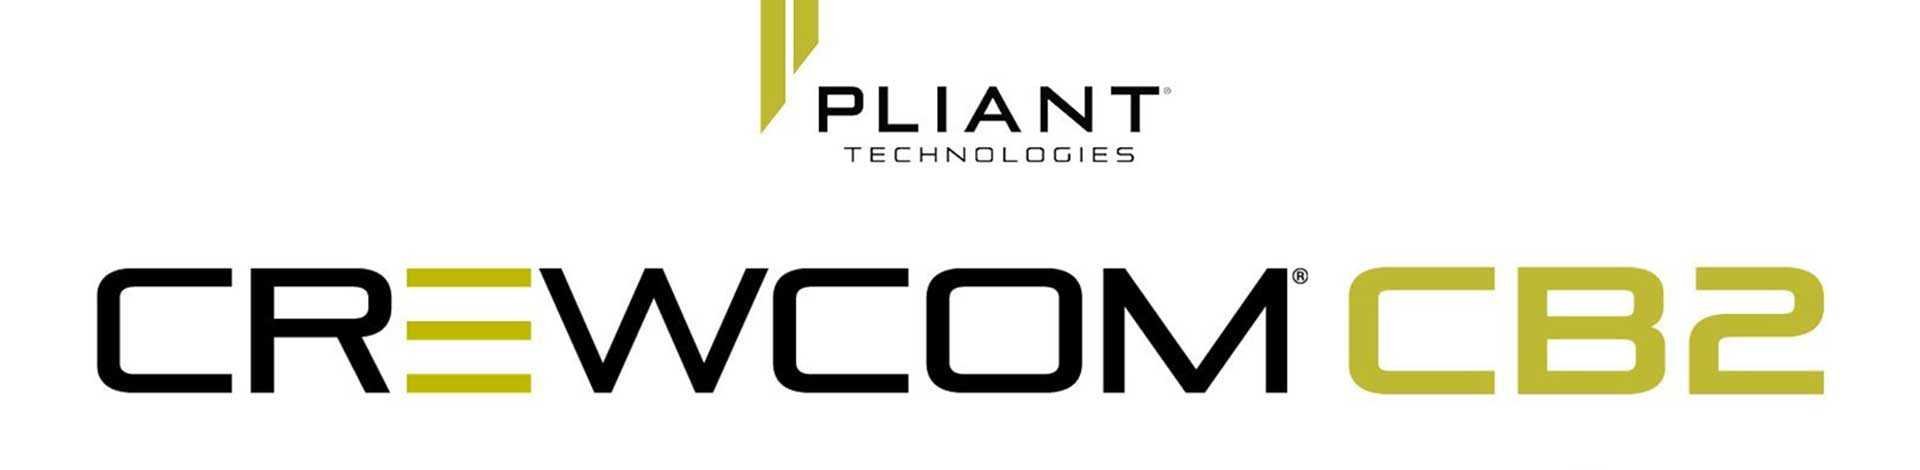 Pliant-Technologies-banner